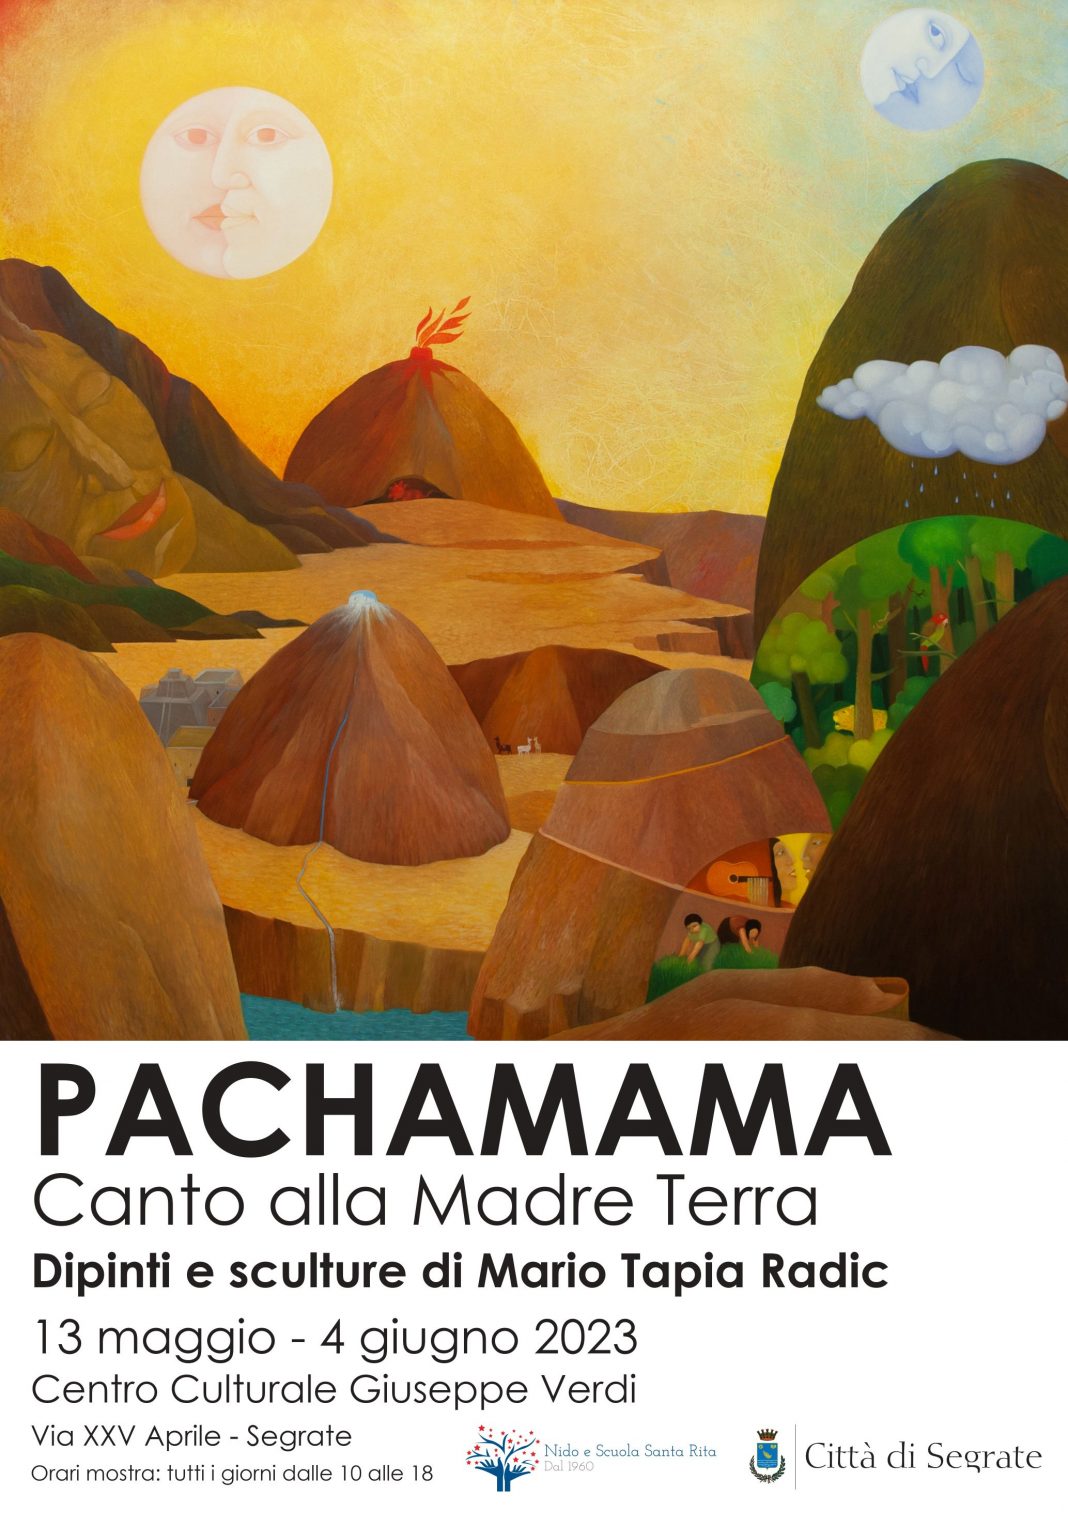 Mario Tapia Radic – PACHAMAMA Canto alla Madre Terrahttps://www.exibart.com/repository/media/formidable/11/img/841/Pachamama-2023-1068x1526.jpg